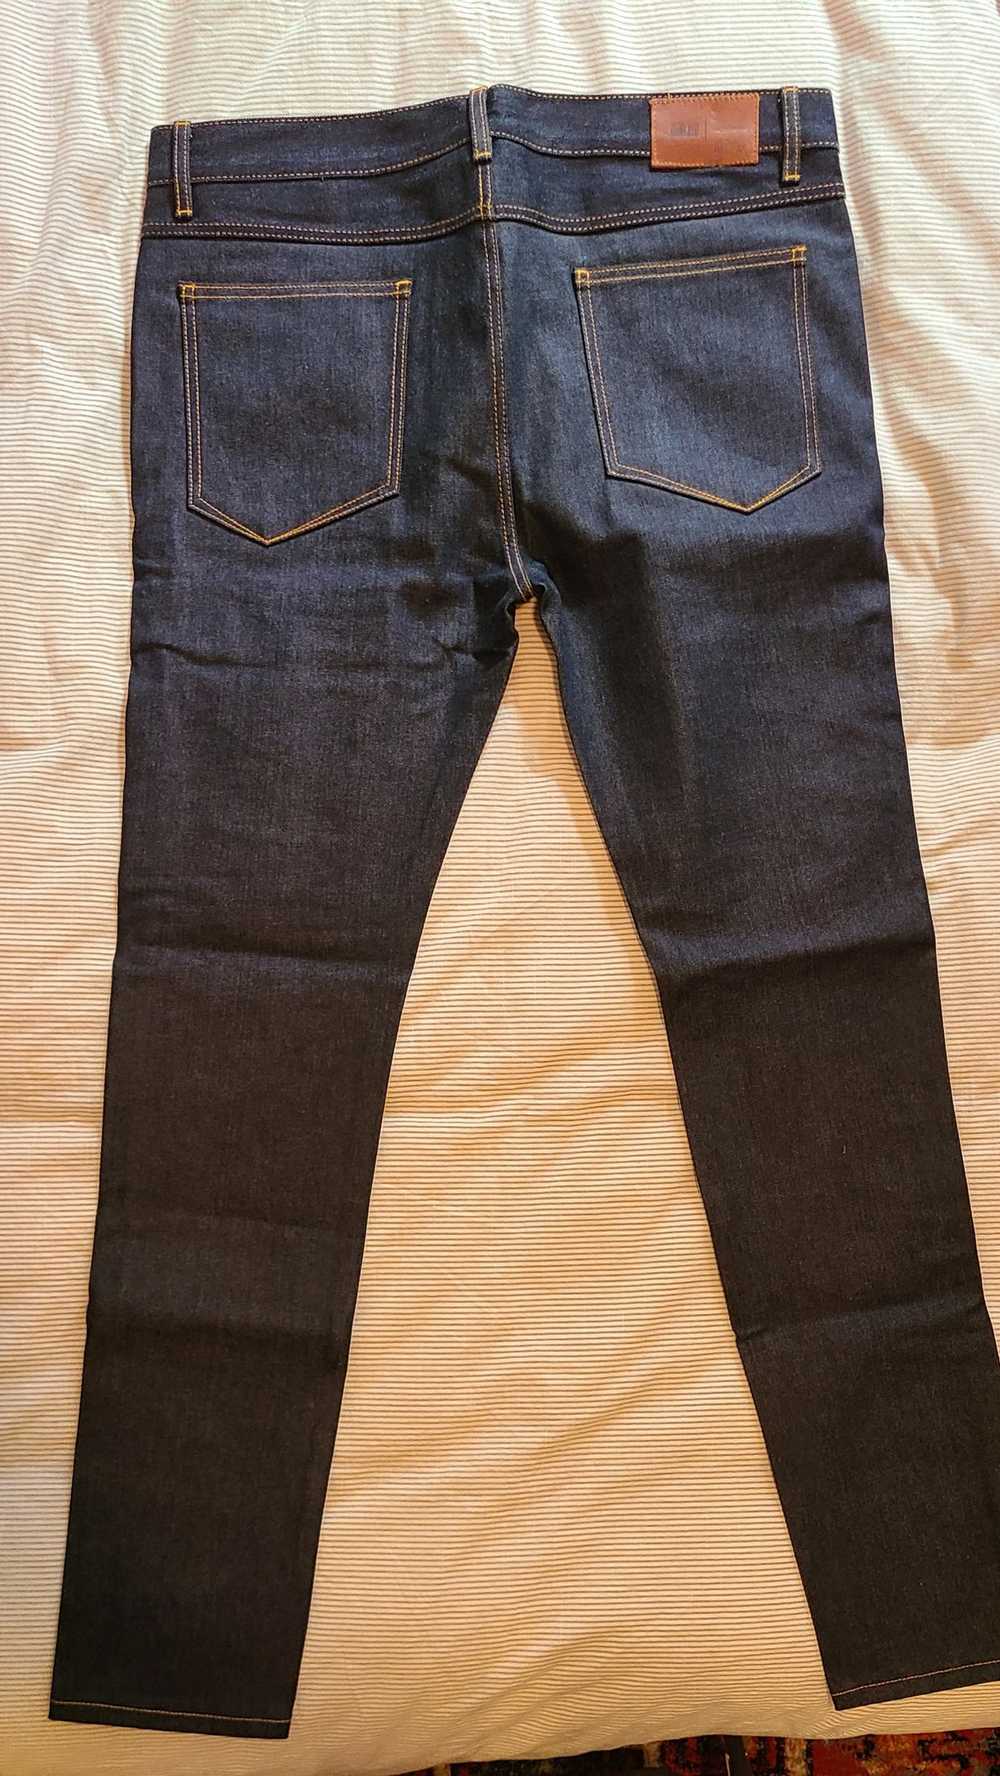 Publish Publish Brand Dark Denim Jeans - image 2